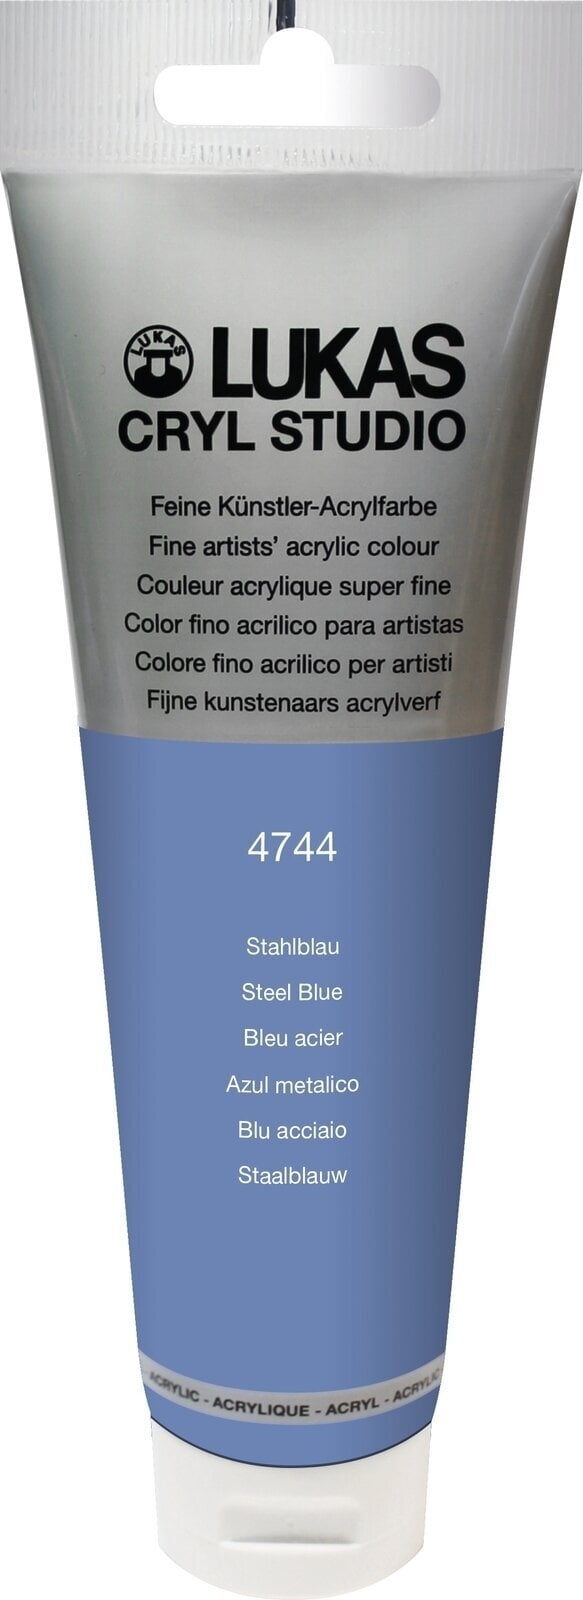 Akrylová farba Lukas Cryl Studio Acrylic Paint Plastic Tube Akrylová farba Steel Blue 125 ml 1 ks